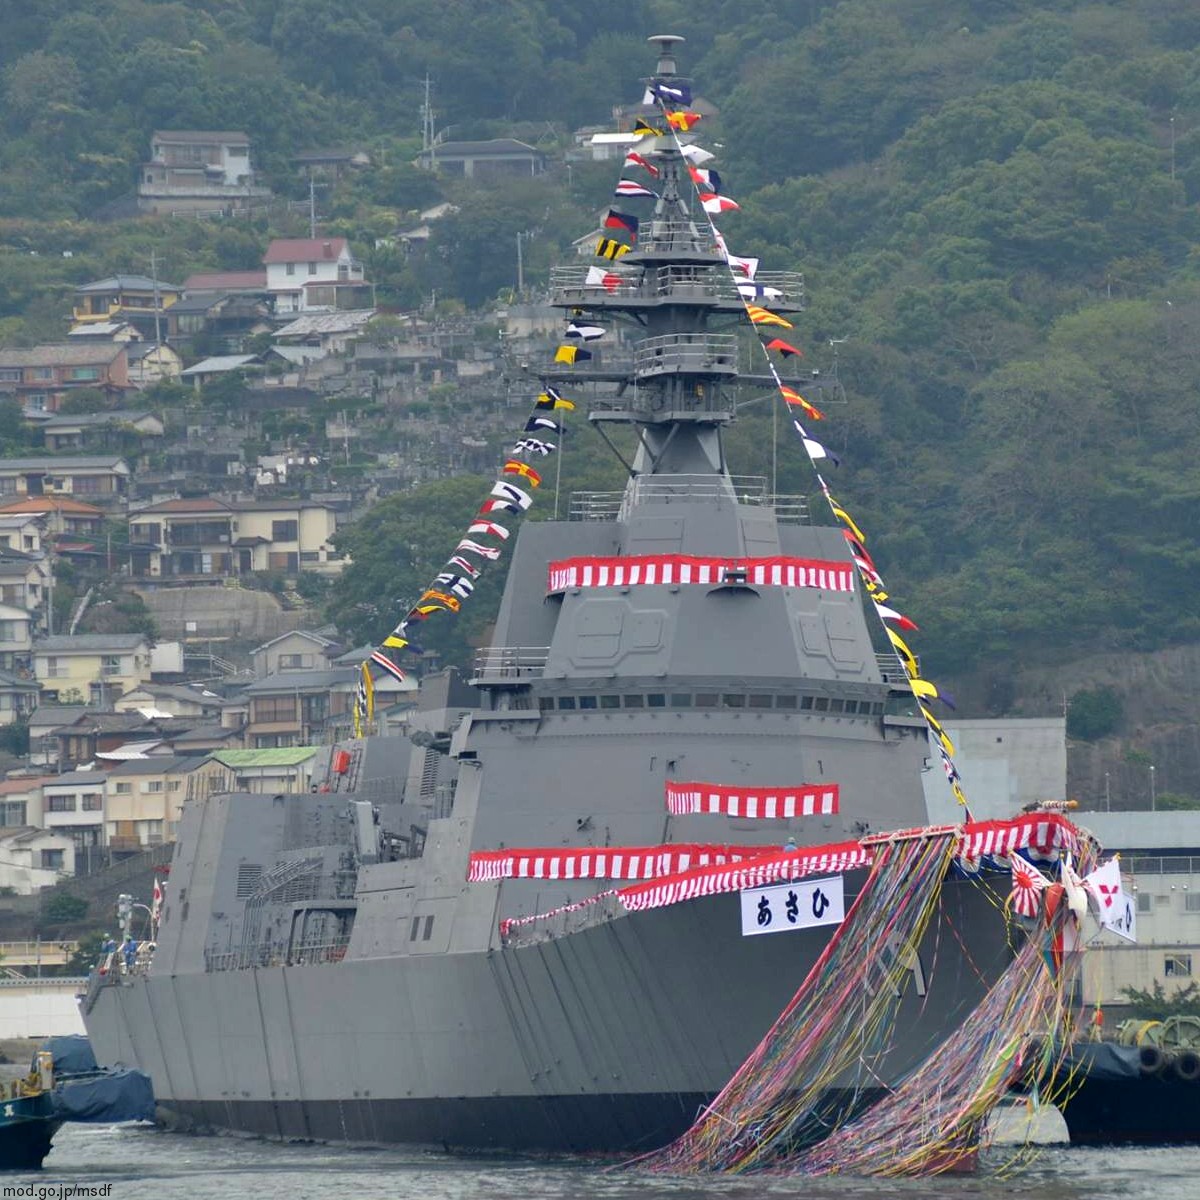 dd-119 js asahi class destroyer japan maritime self defense force jmsdf 09 commissioning launching ceremony